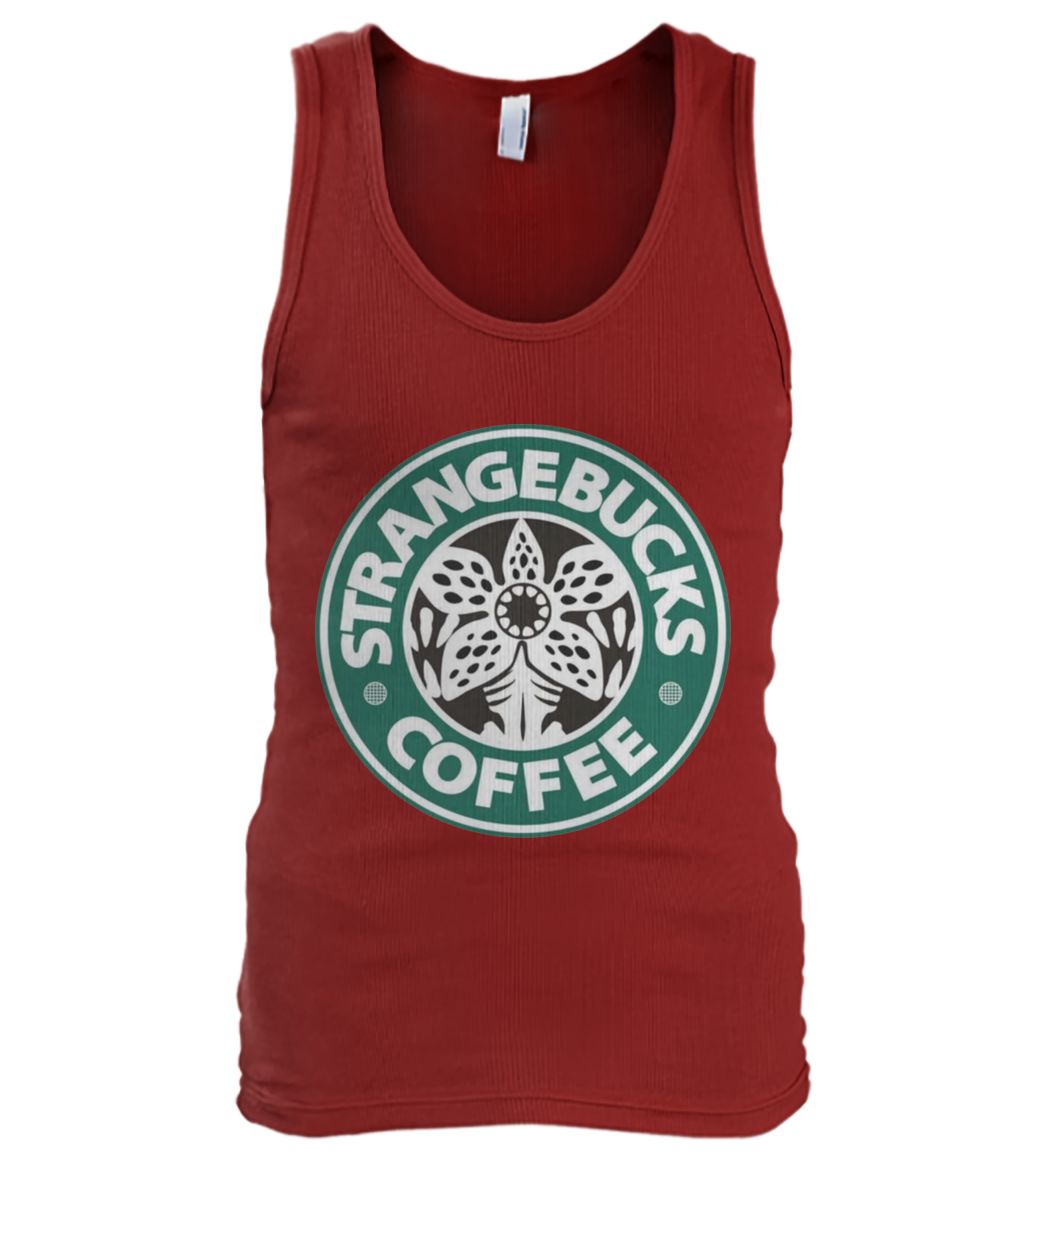 Strangebucks coffee men's tank top